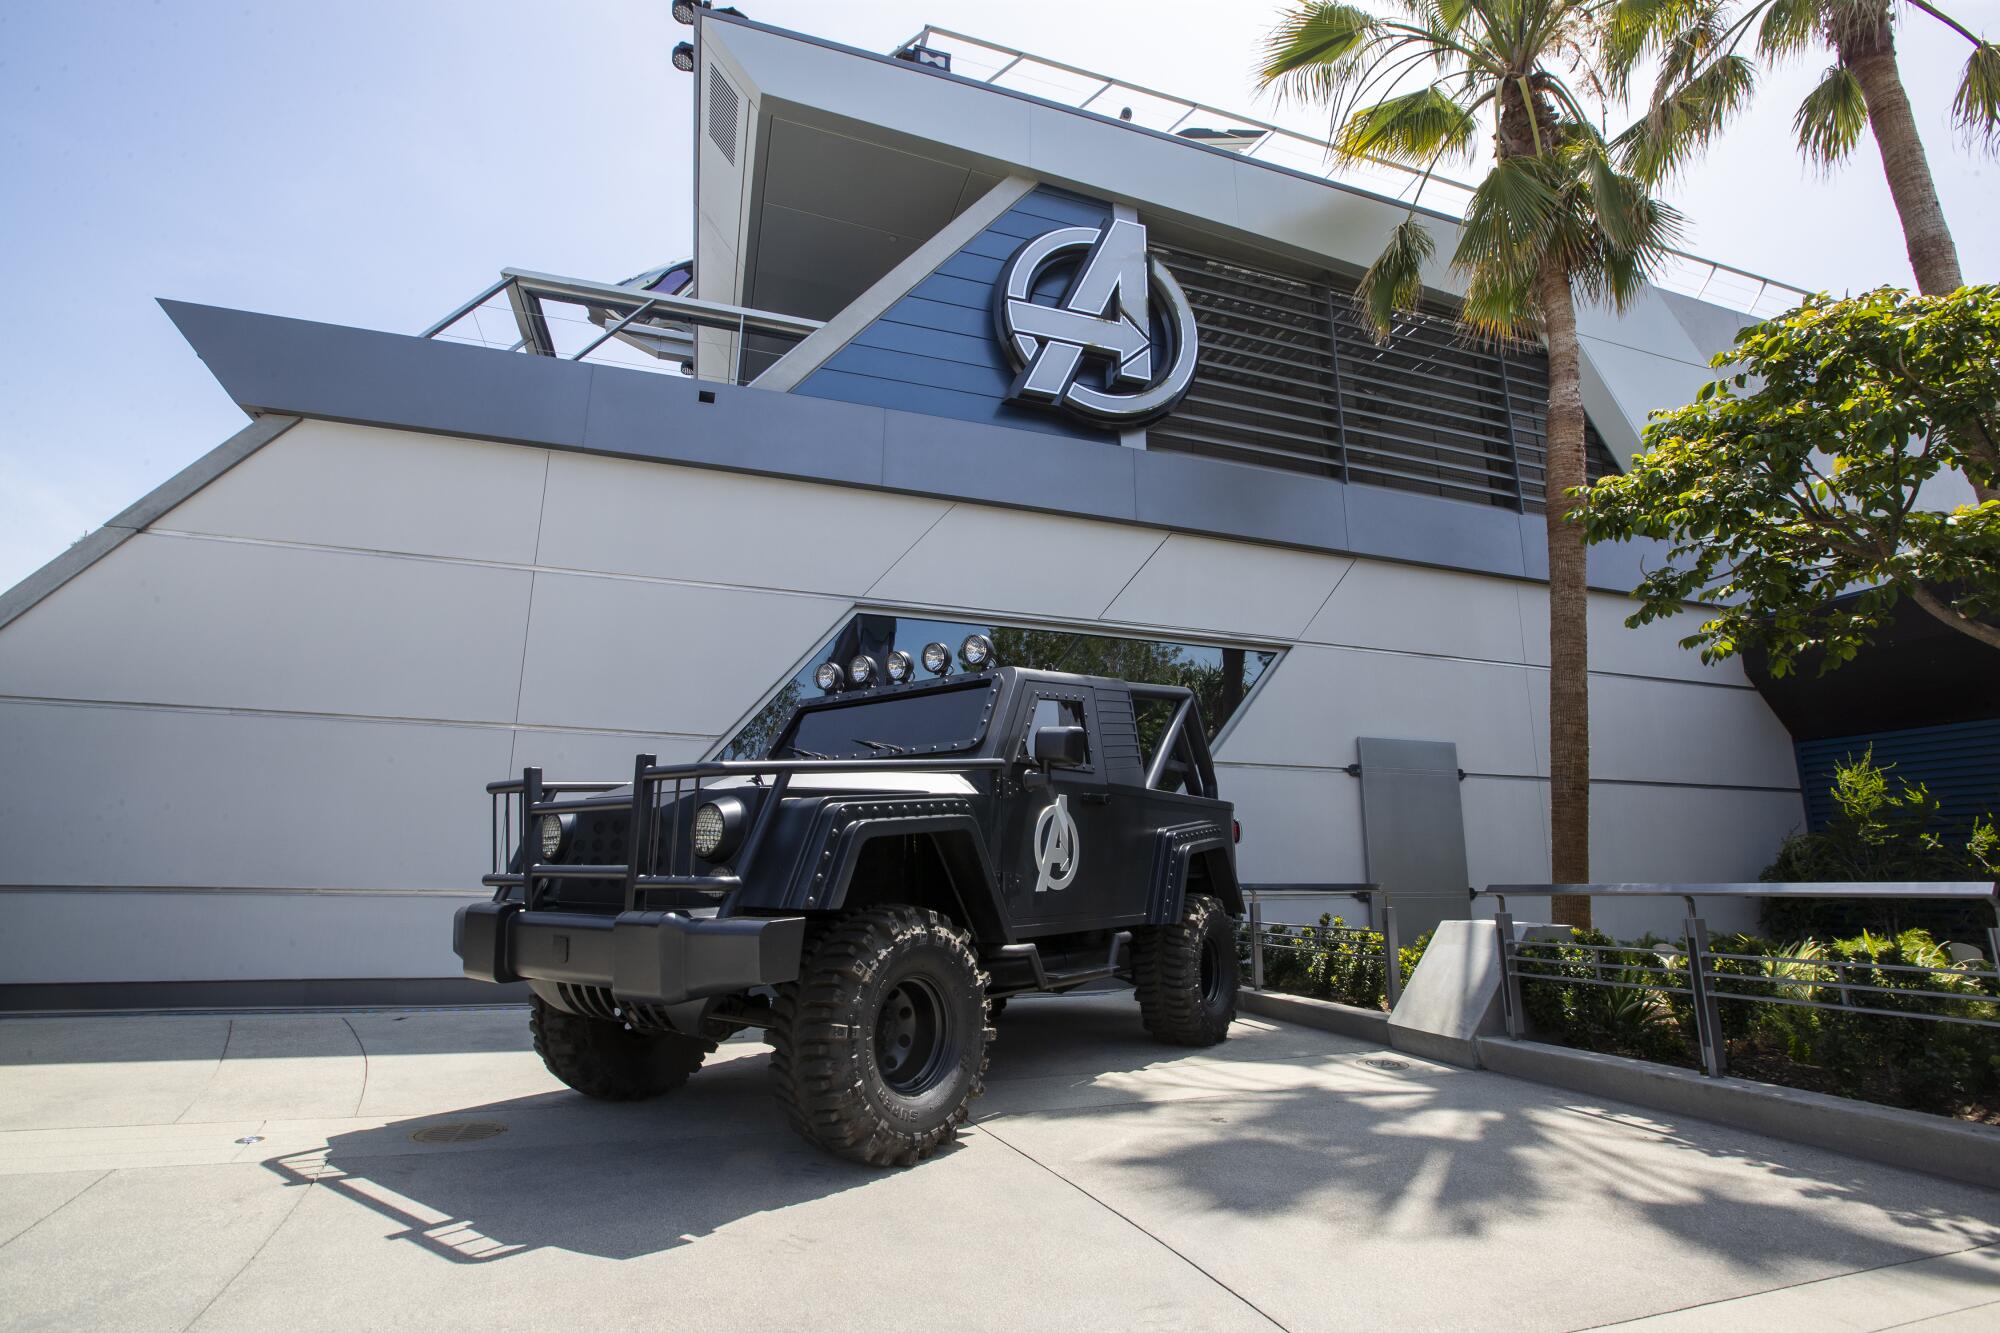 A vehicle outside Avengers headquarters